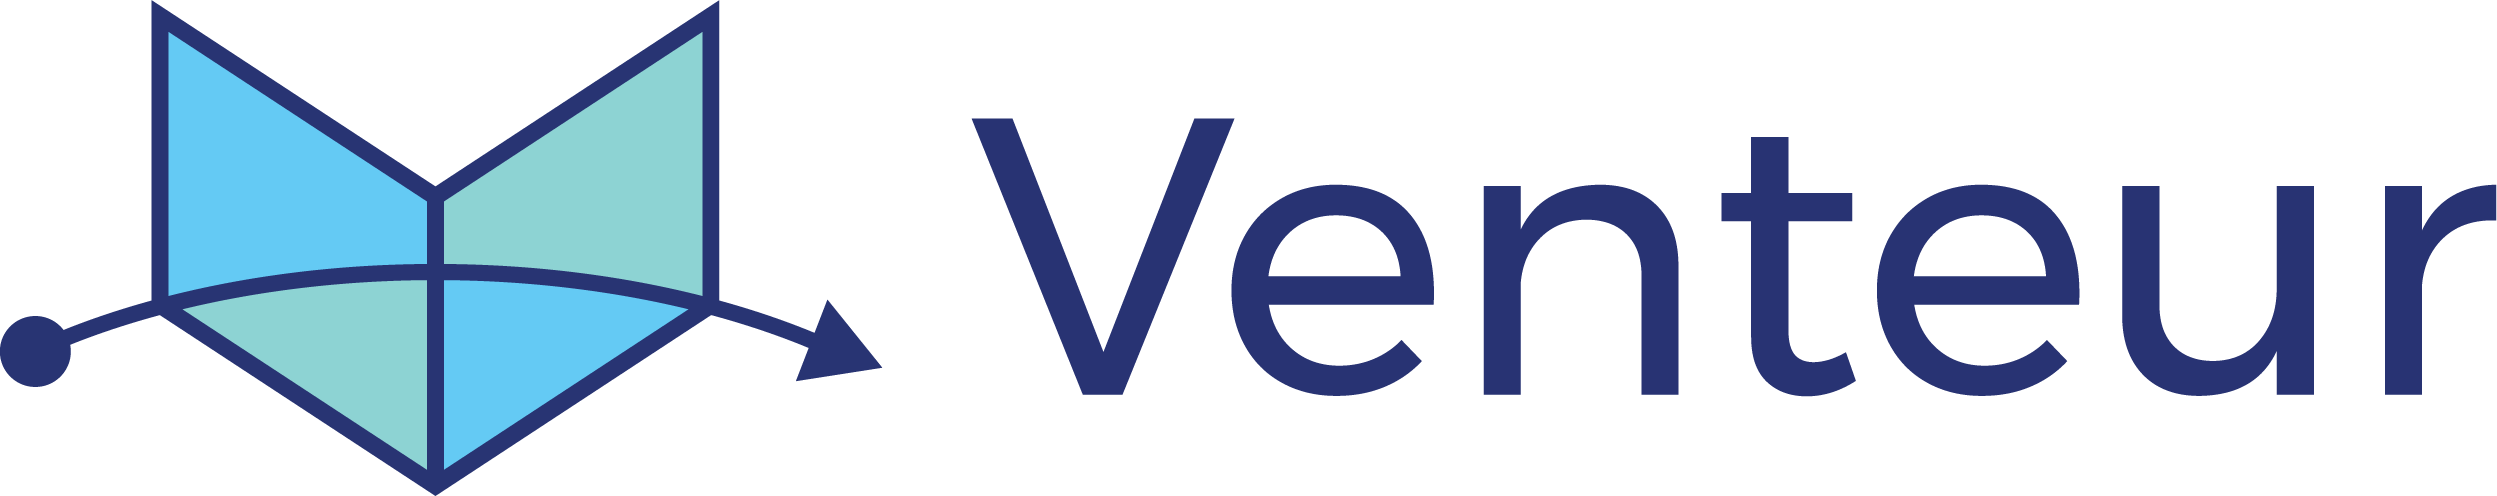 Venteur company logo